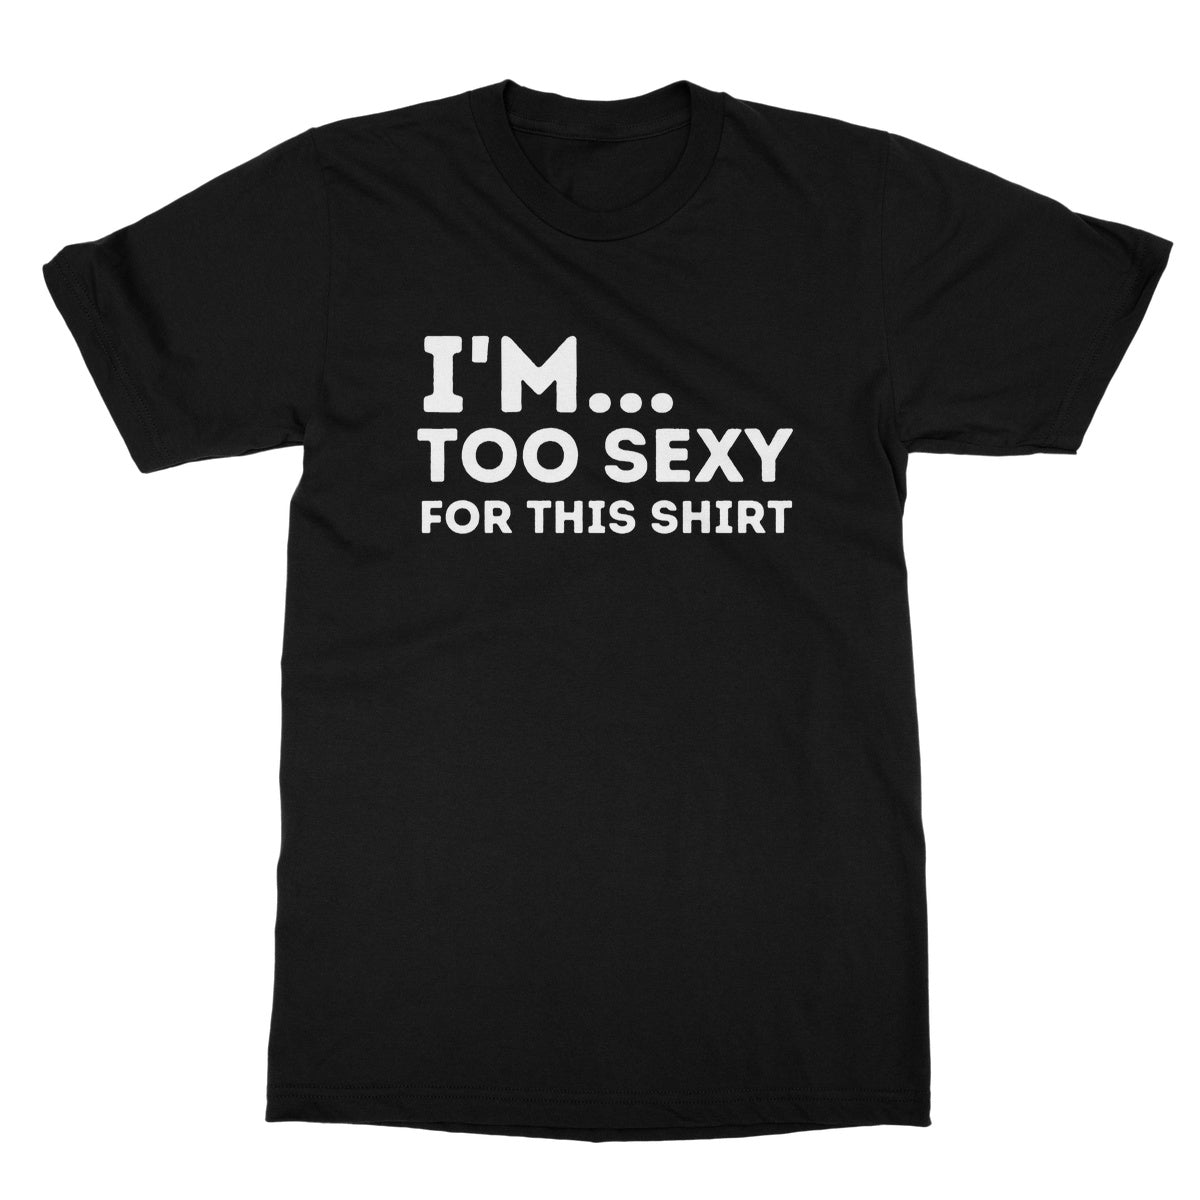 I'm too sexy for this shirt t shirt black